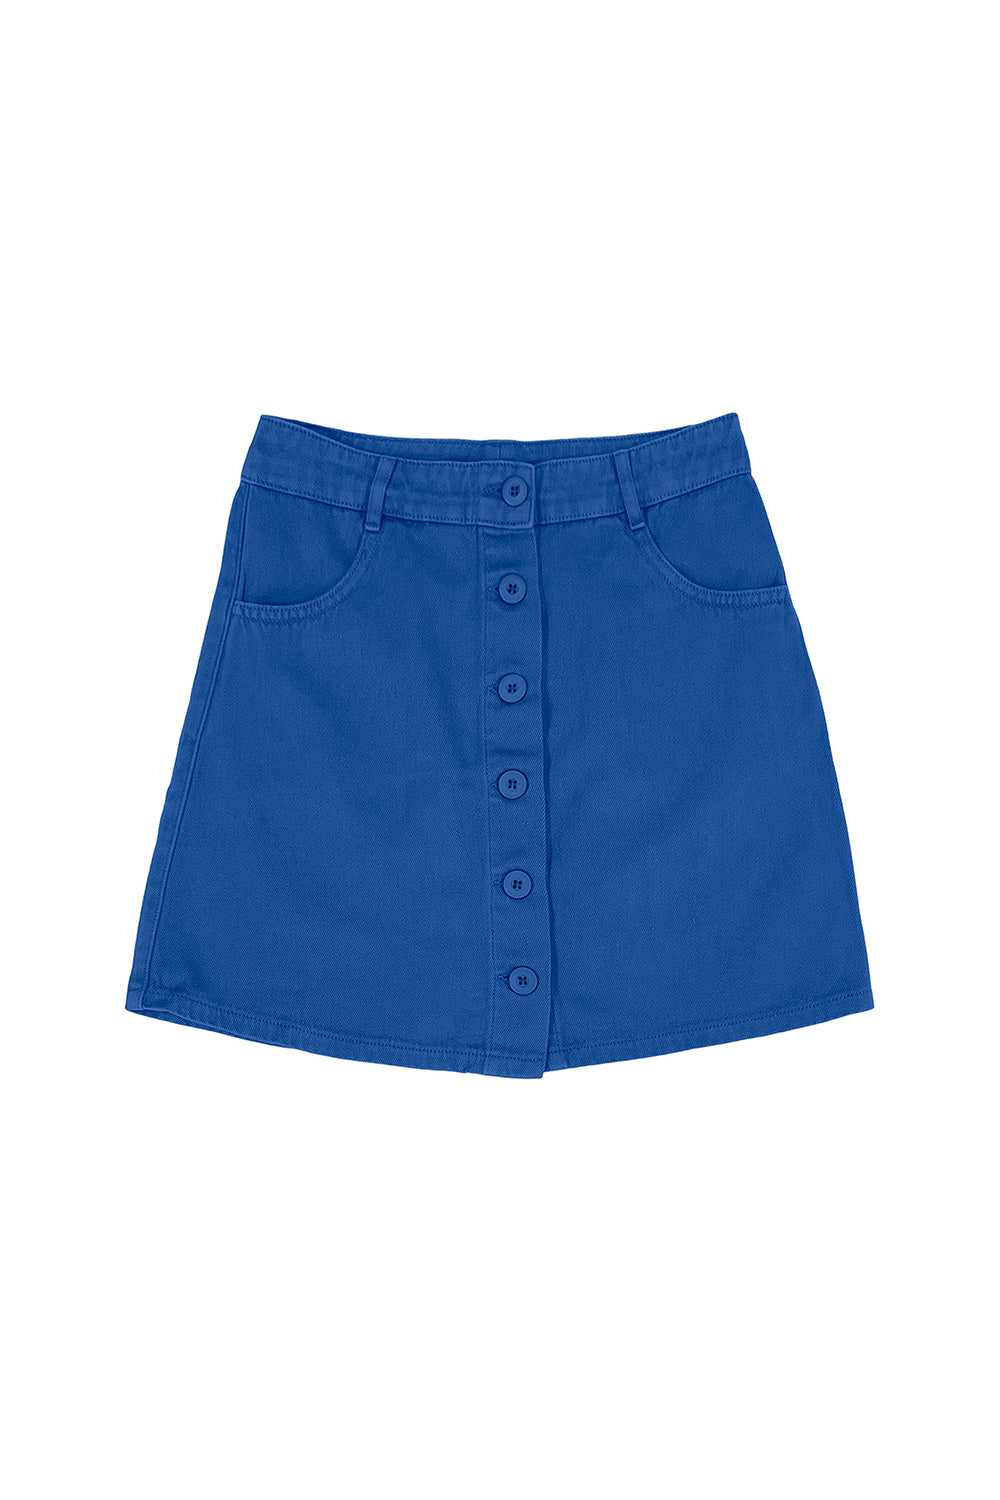 Vassar Skirt | Jungmaven Hemp Clothing & Accessories / Color: Galaxy Blue